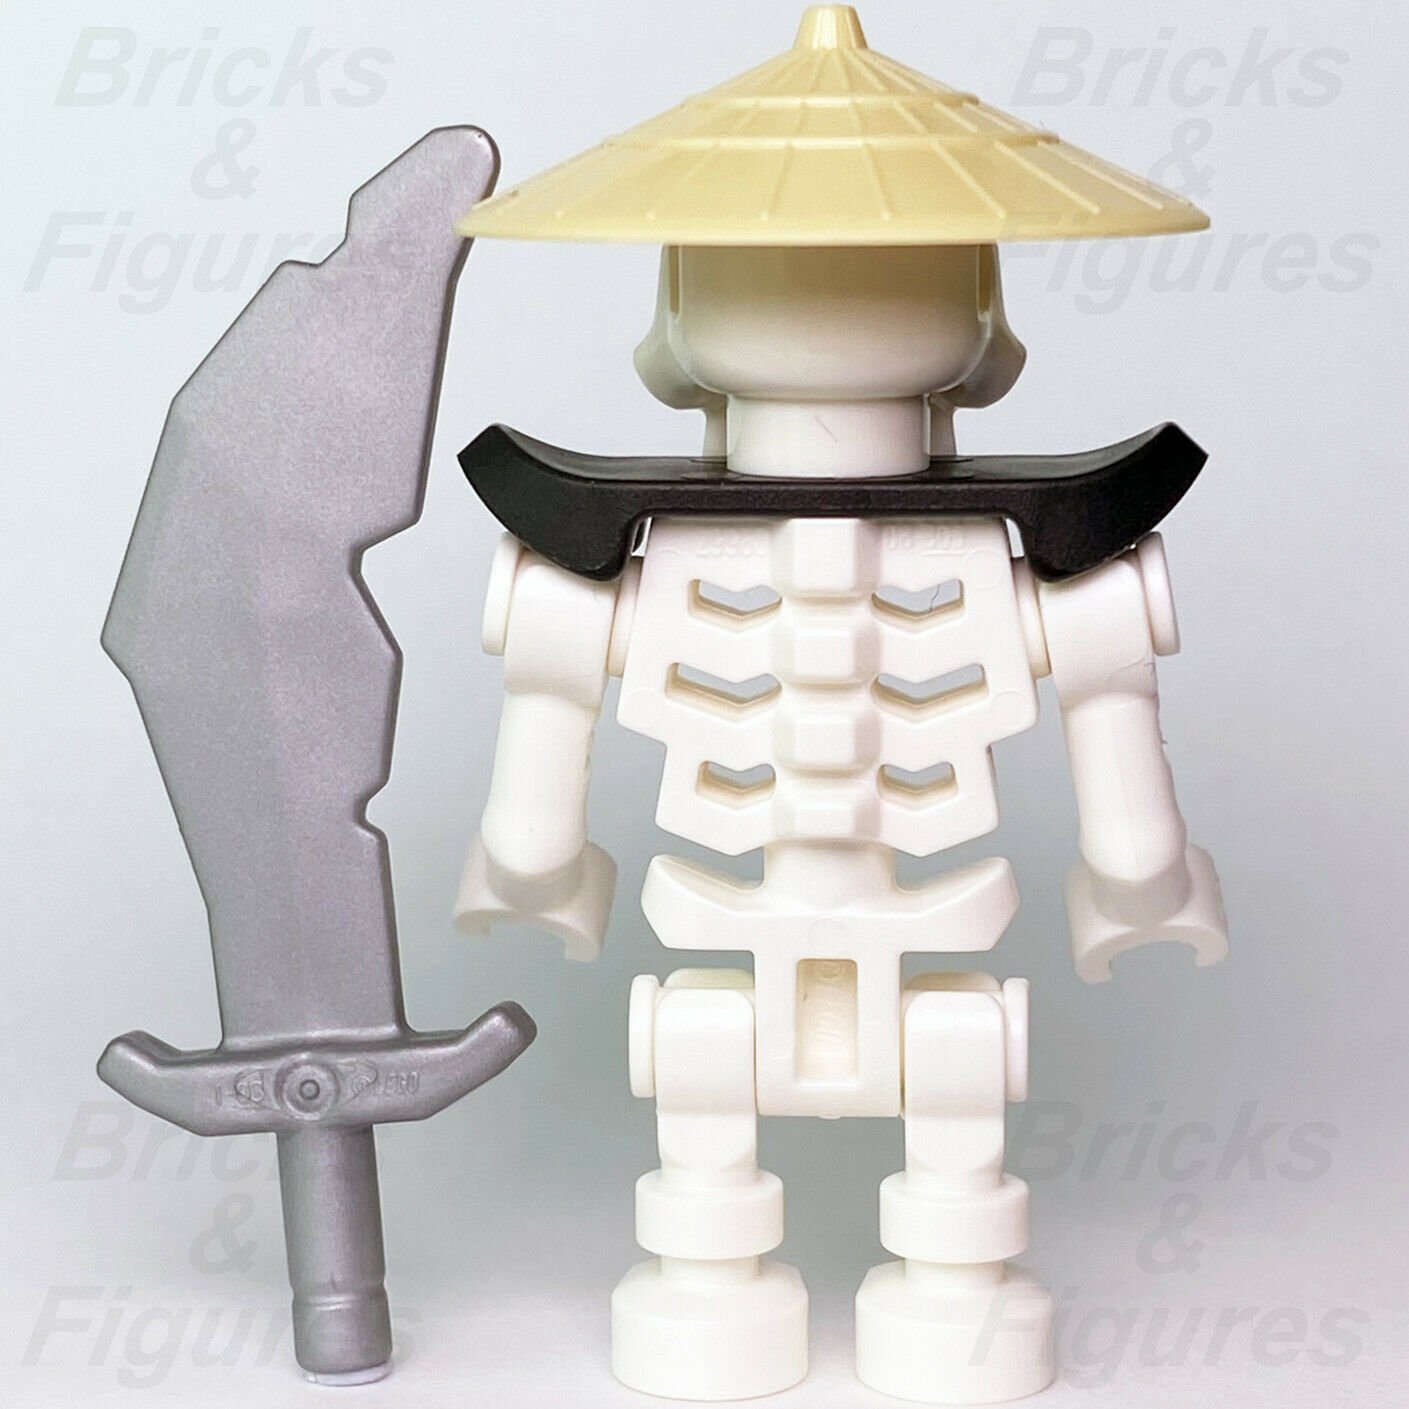 Ninjago LEGO Skulkin Skeleton The Golden Weapons Minifigure 71730 71753 njo642 - Bricks & Figures